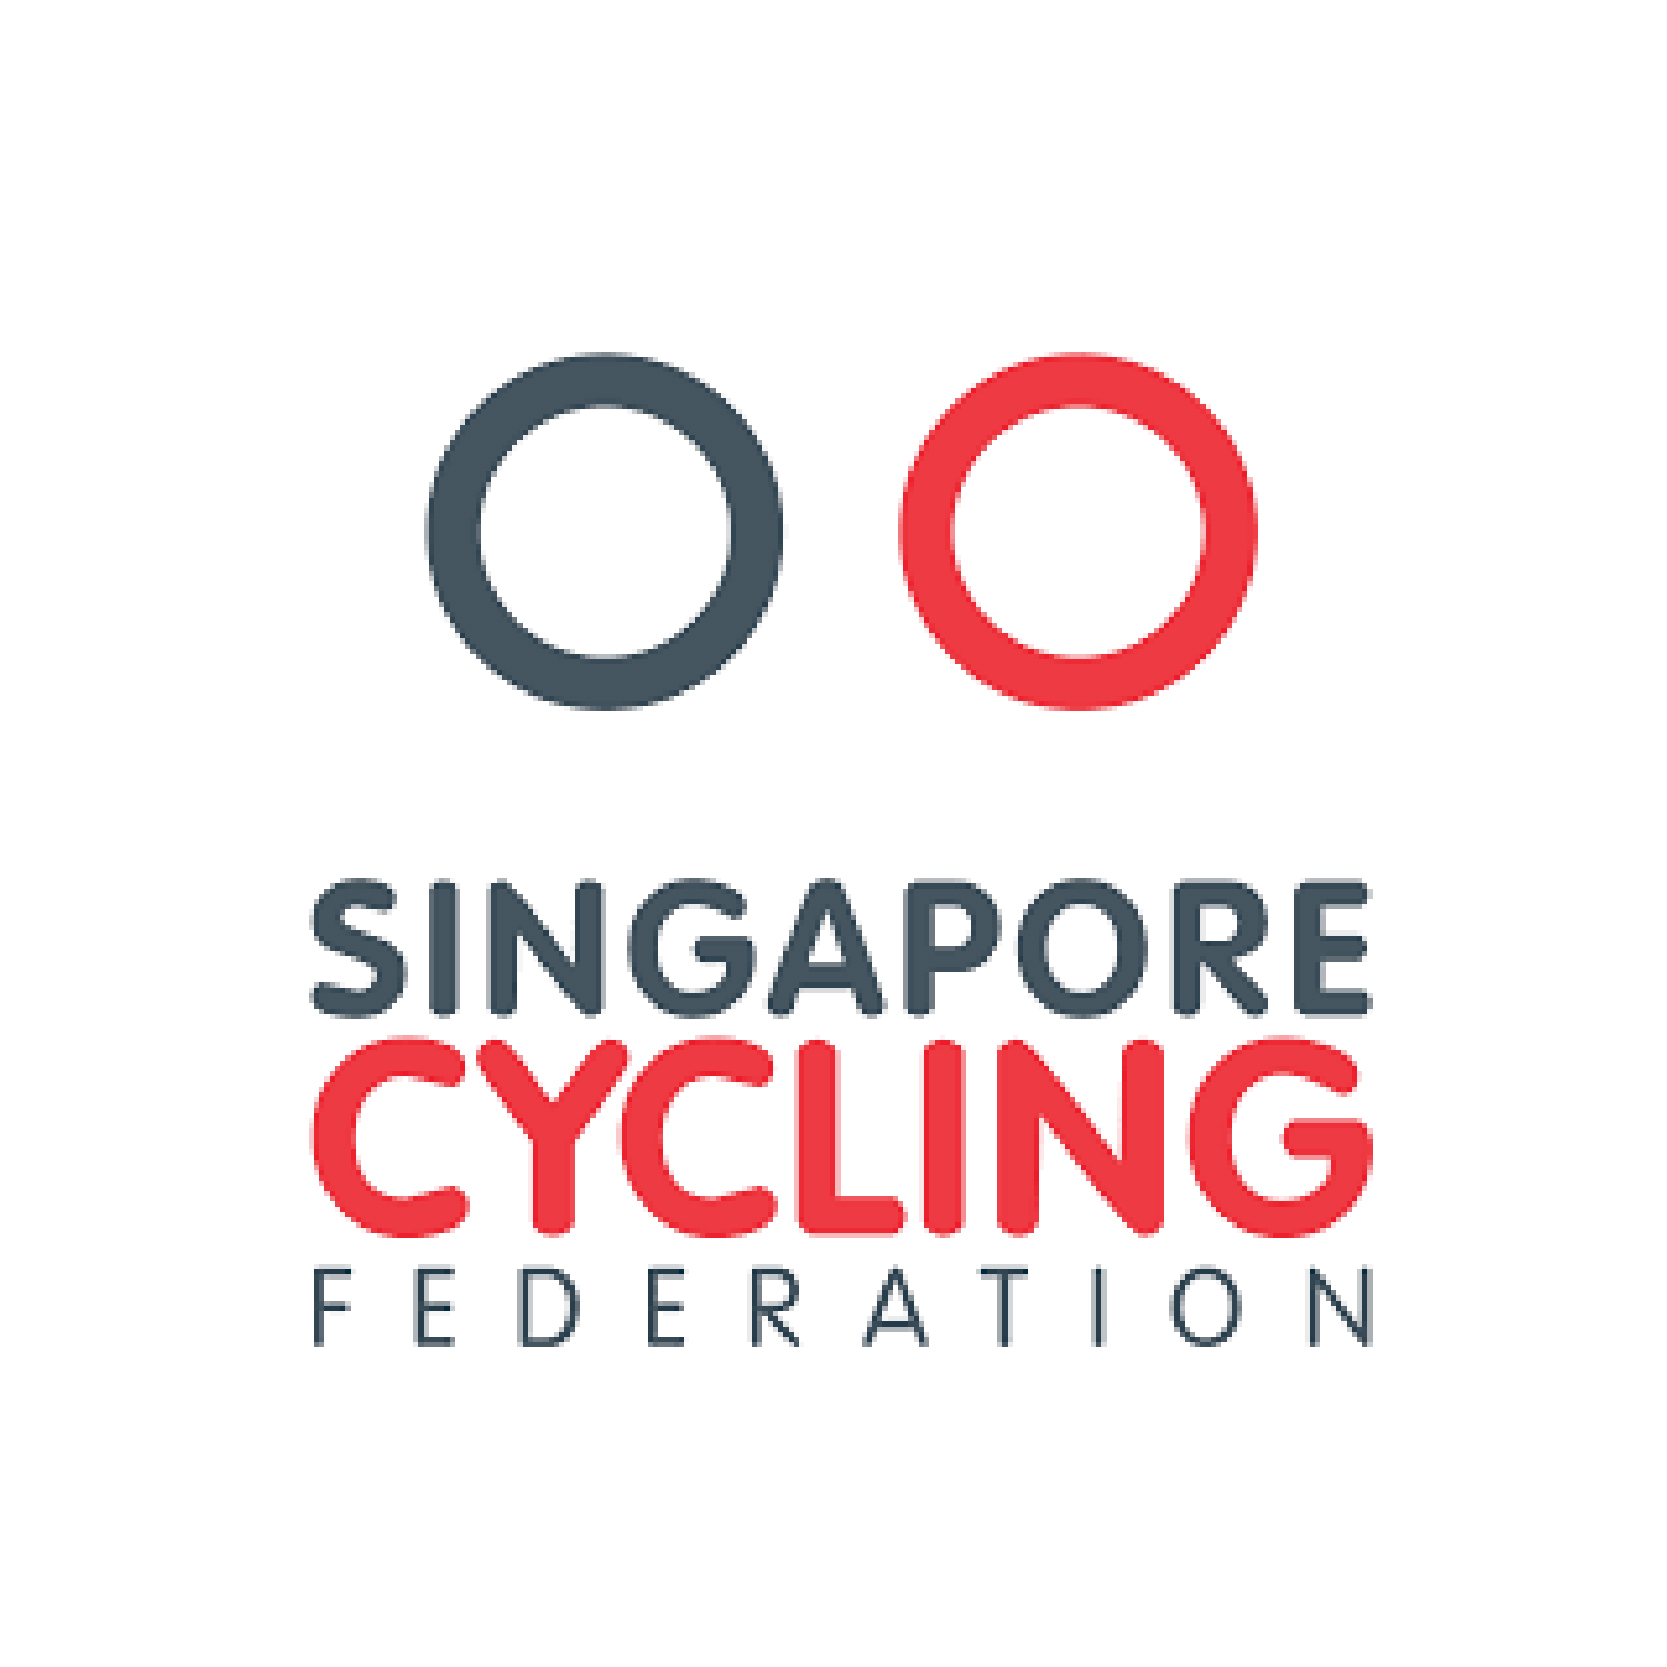 Singapore Cycling Federation